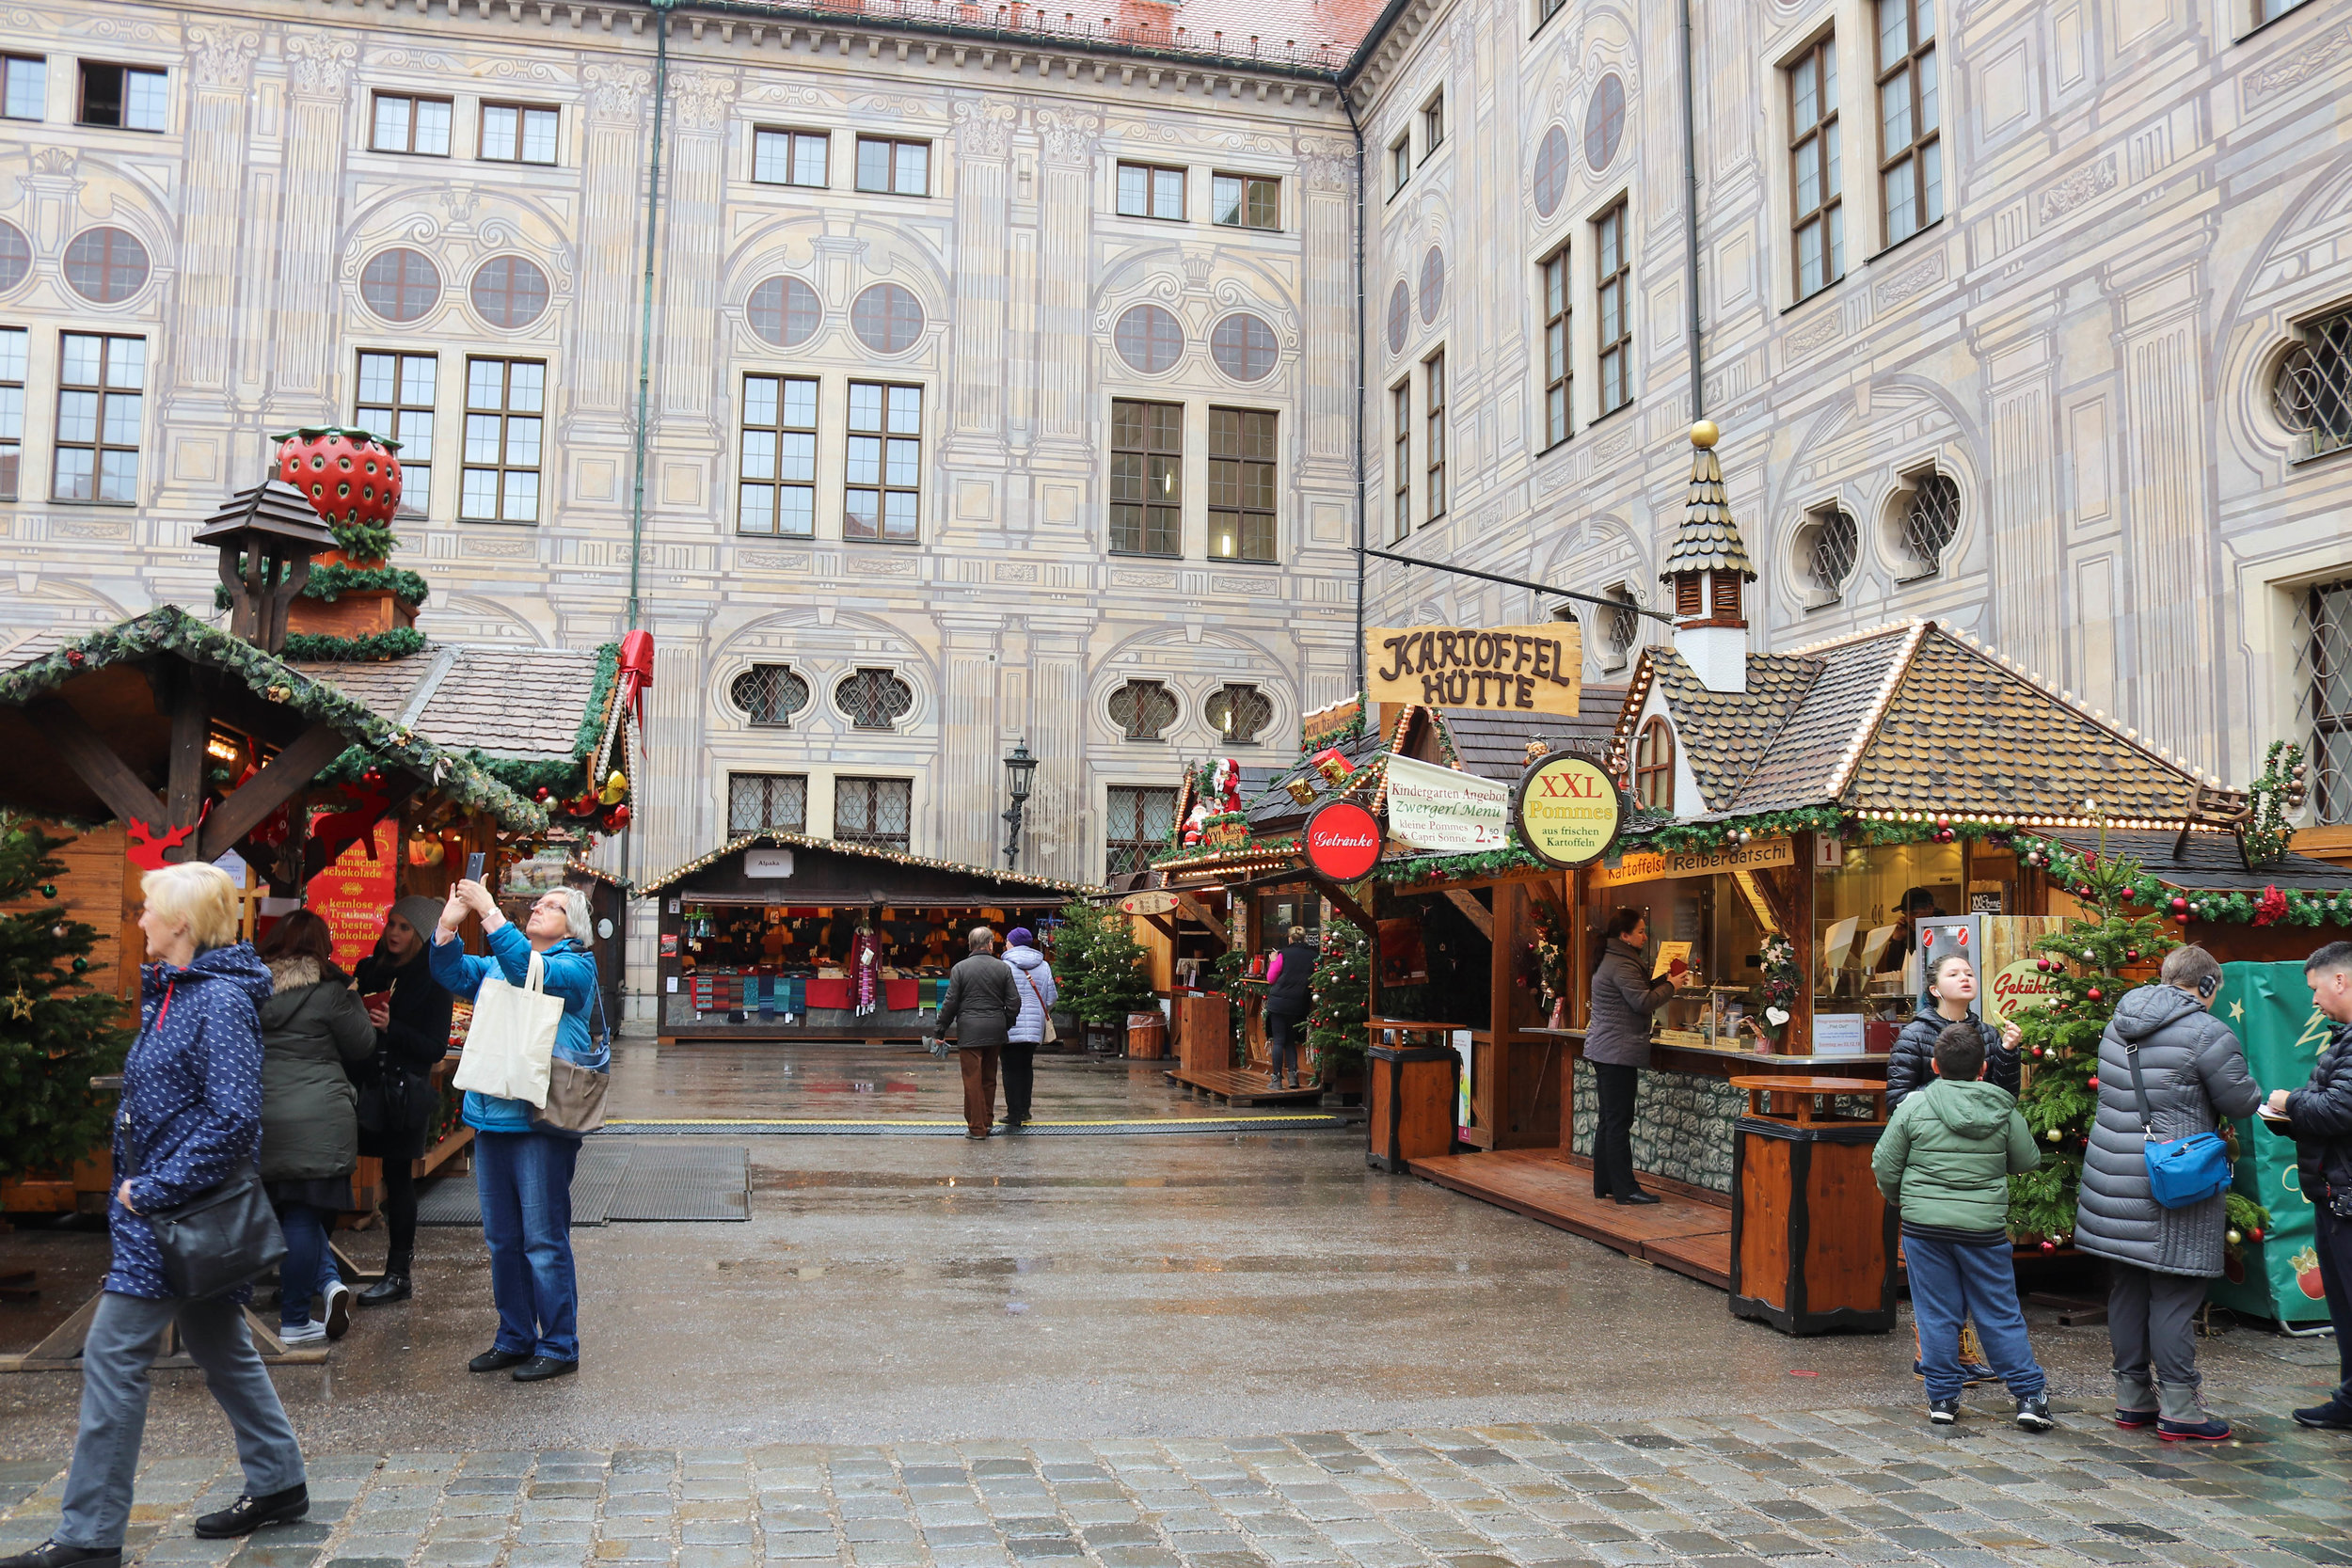 Munich’s Residence Christmas Market